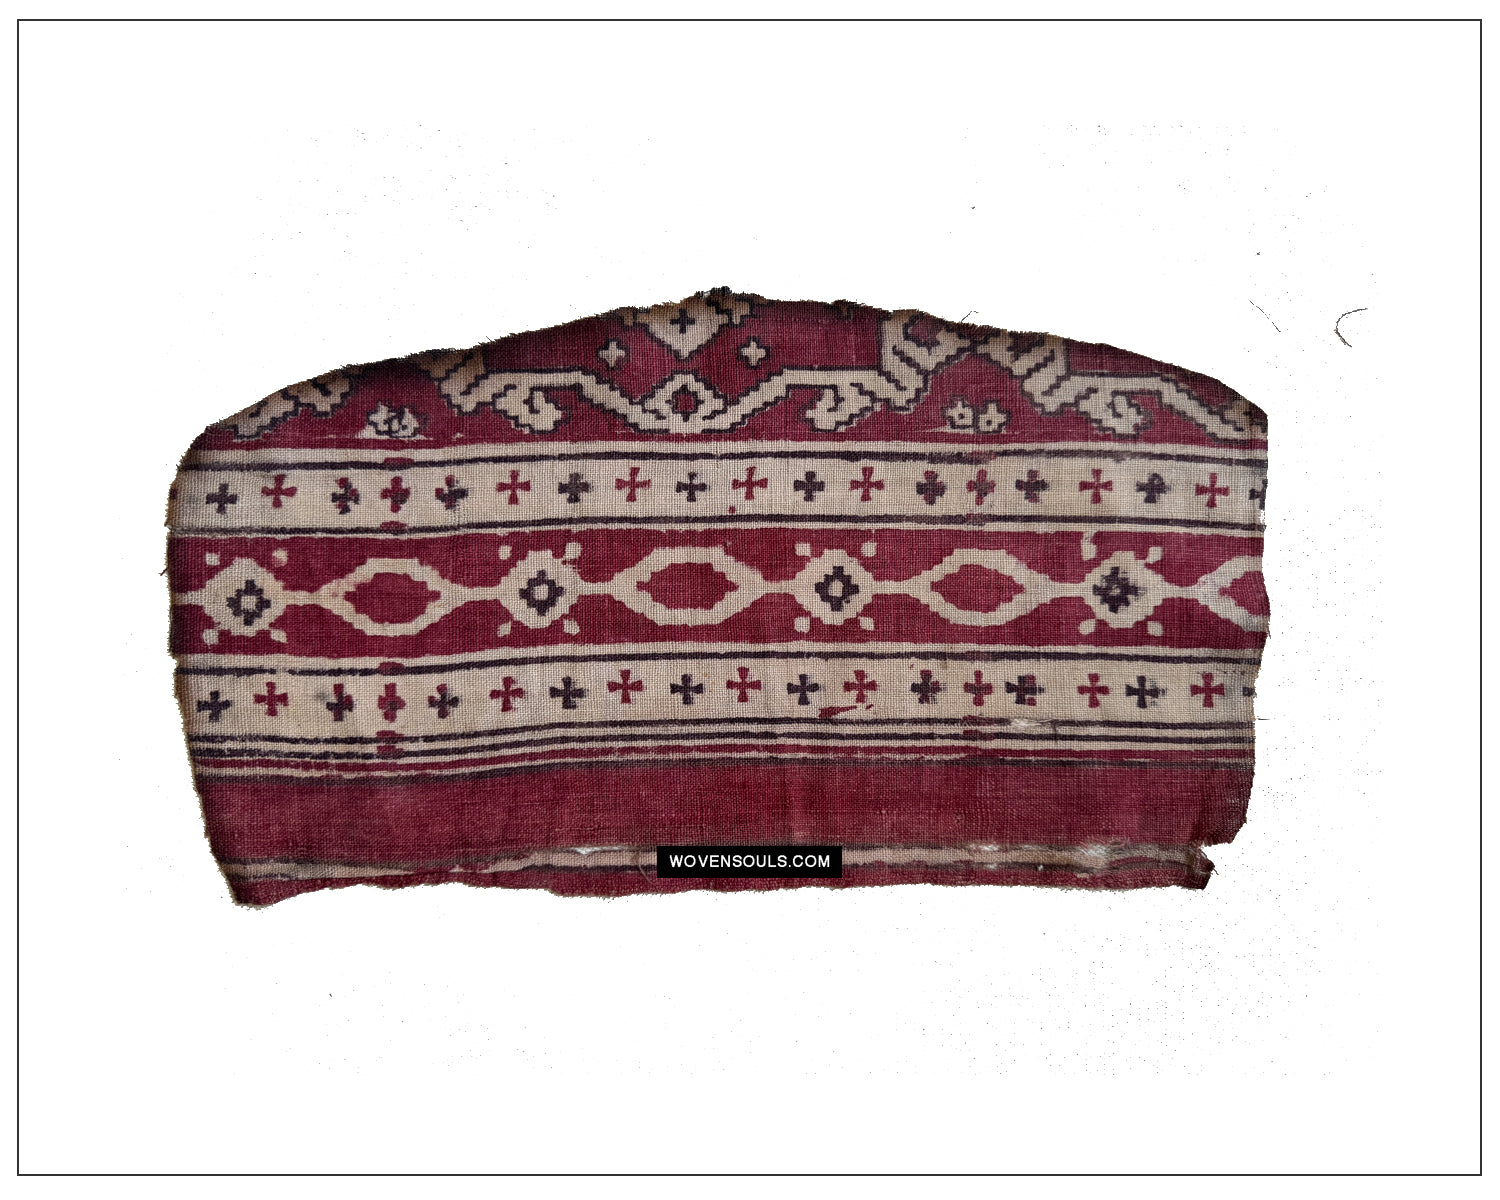 1898 Antique Indian Trade Textile  Patola print Toraja Fragment